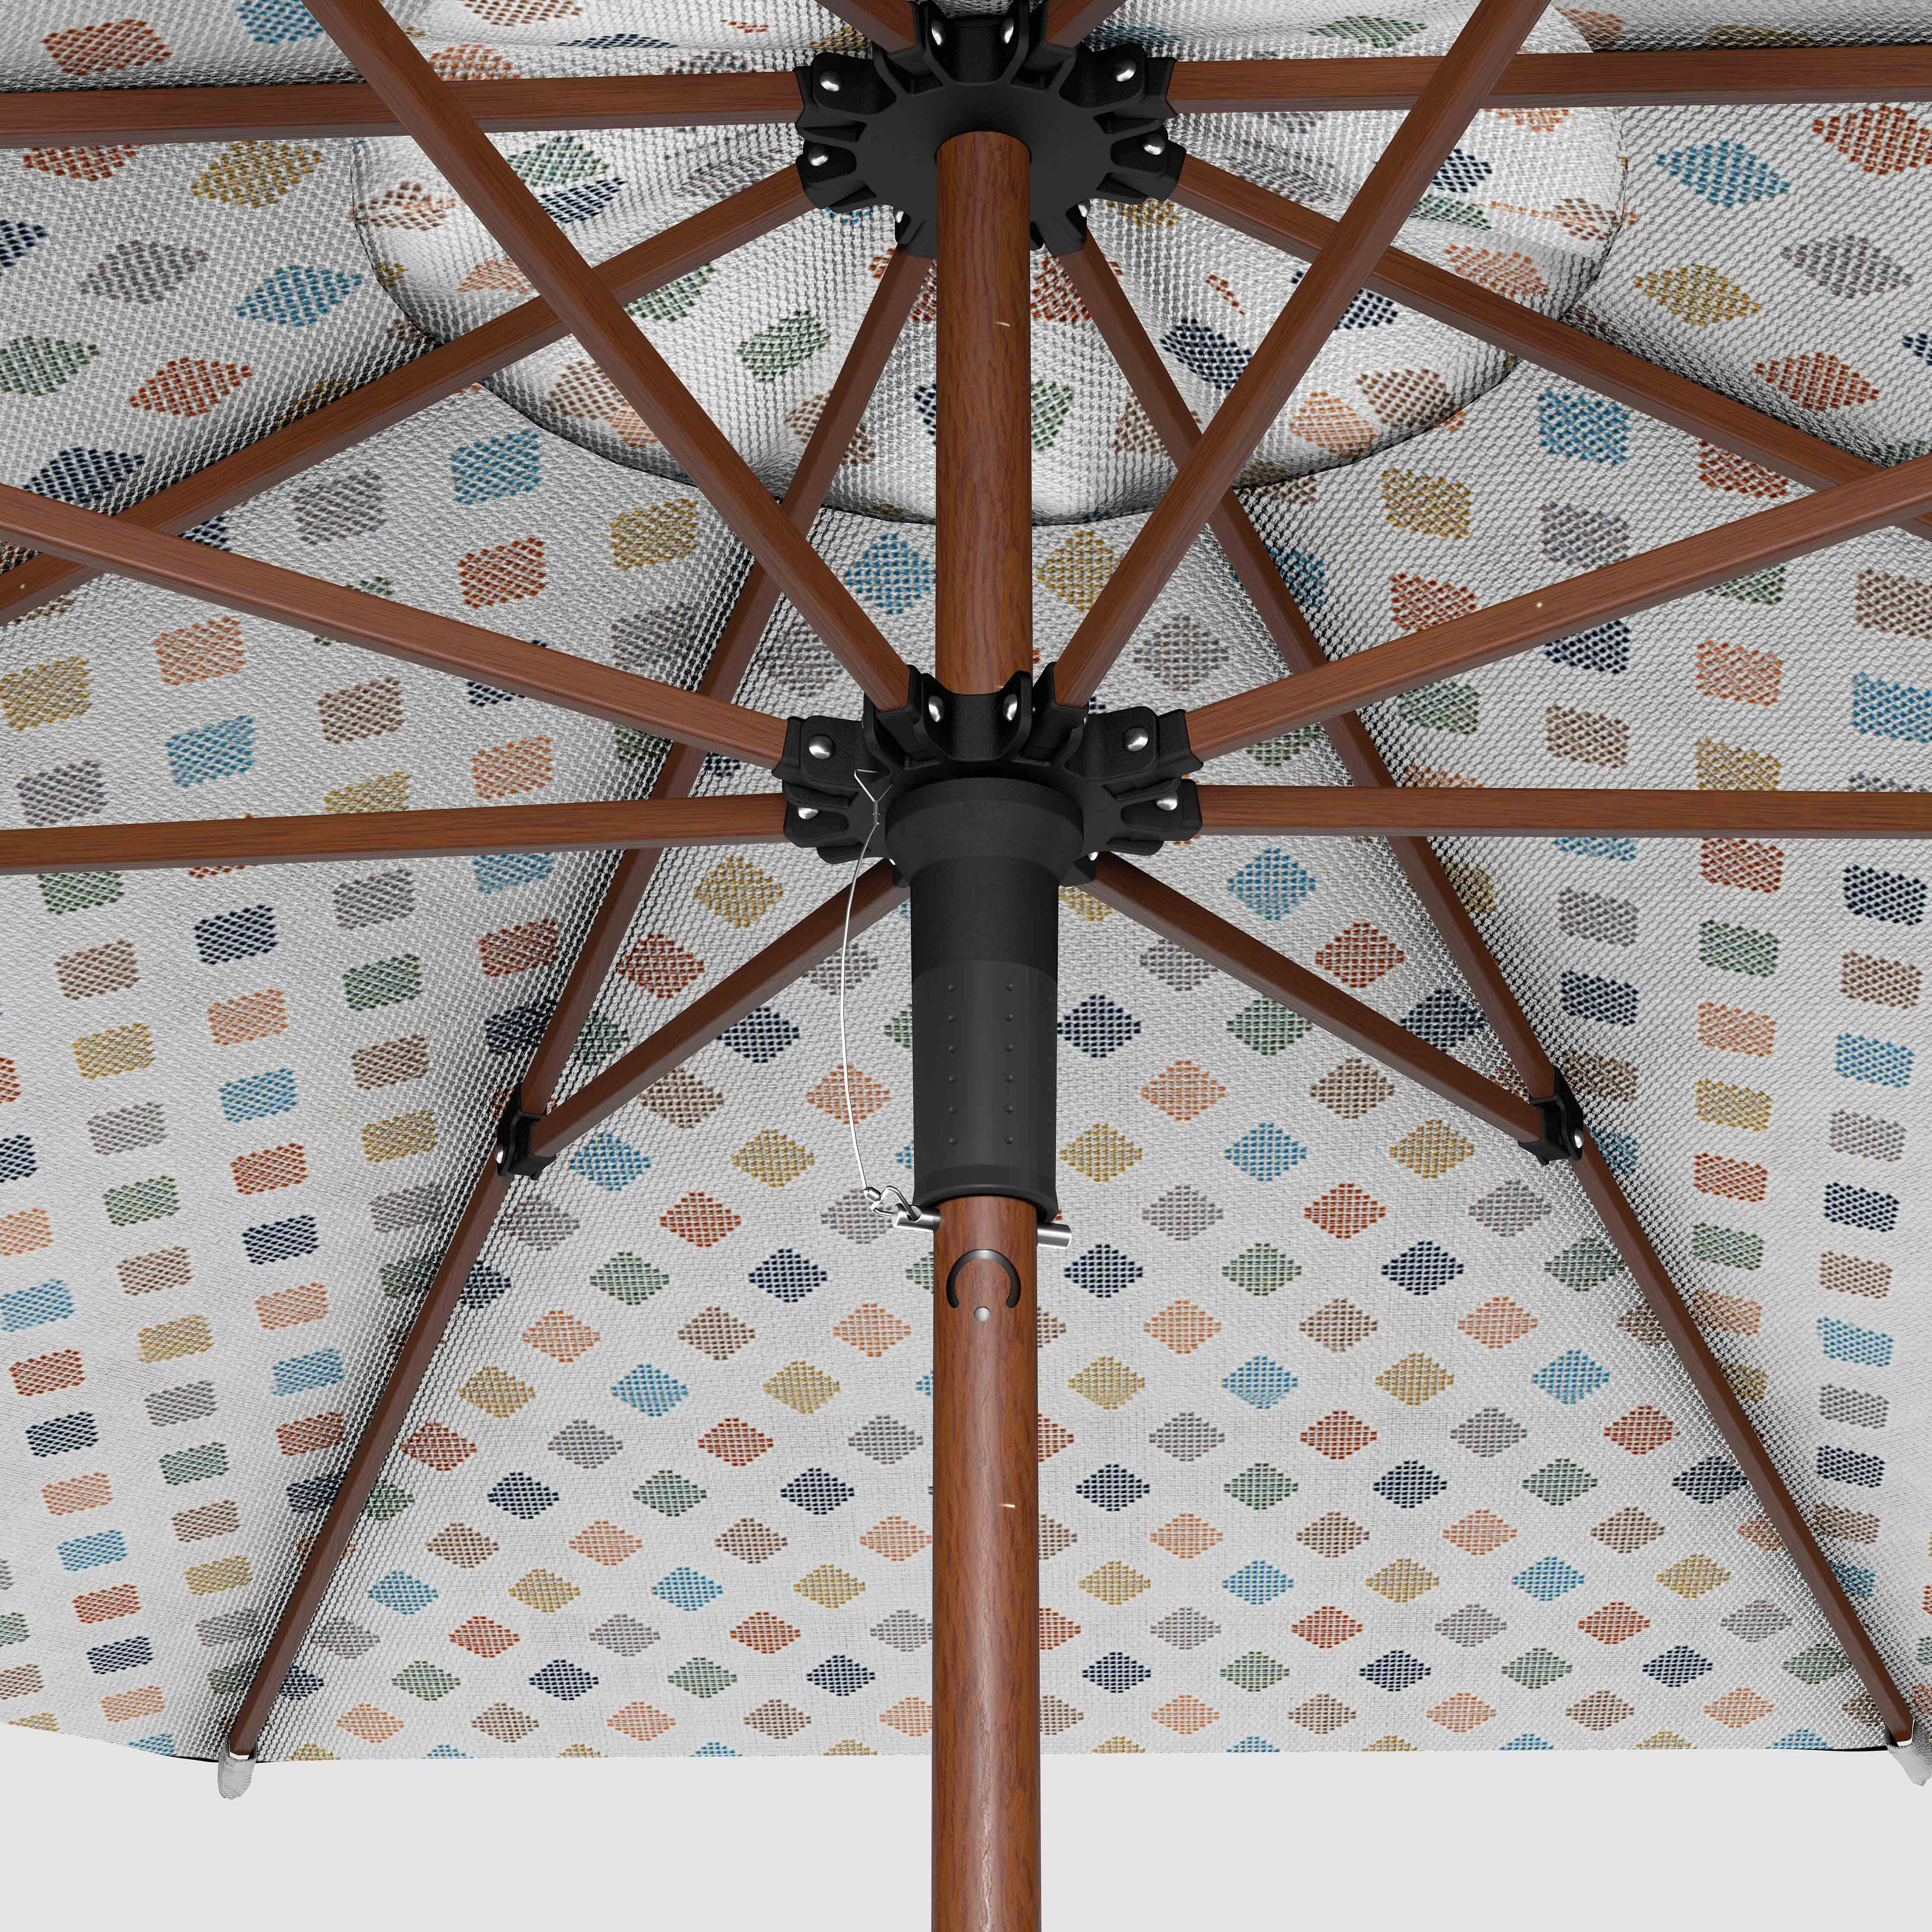 The Wooden™ - Sunbrella Infused Gem